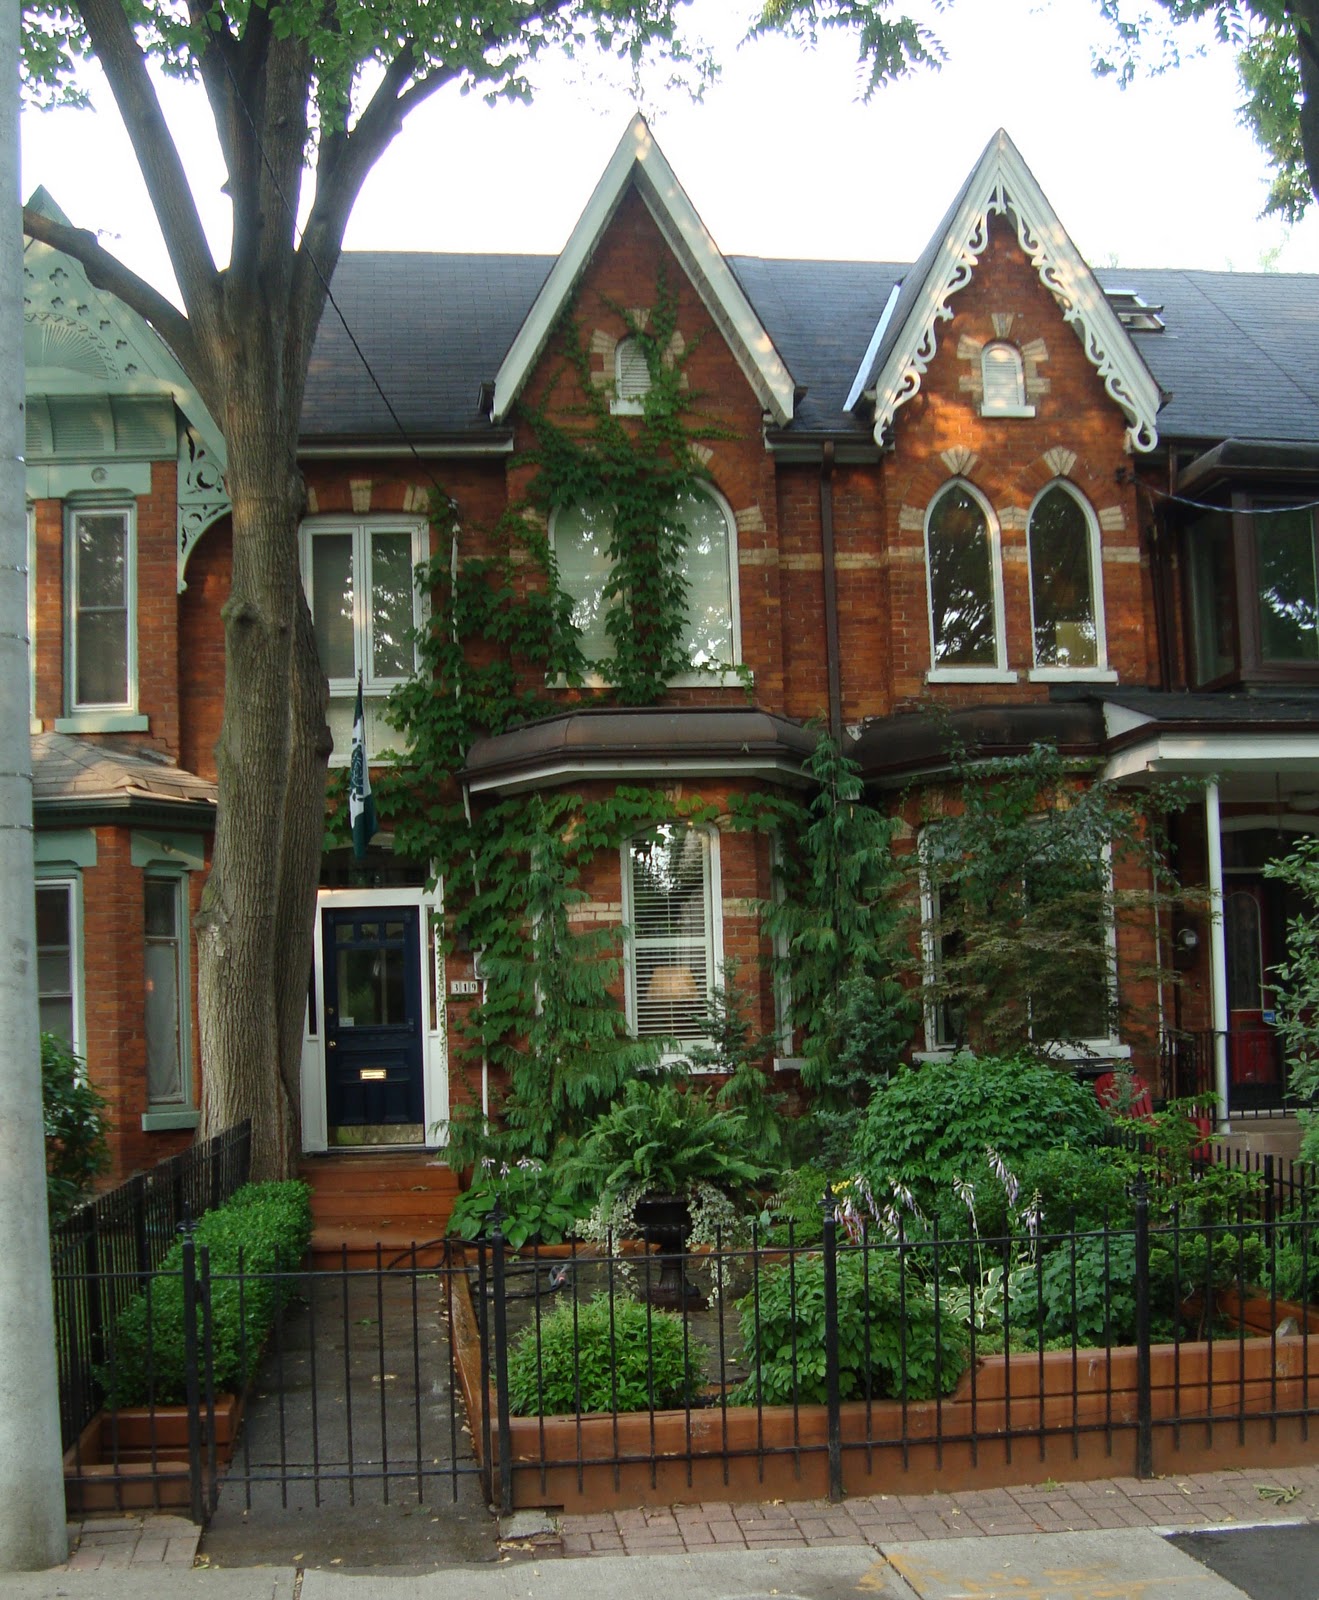 Toronto: Houses